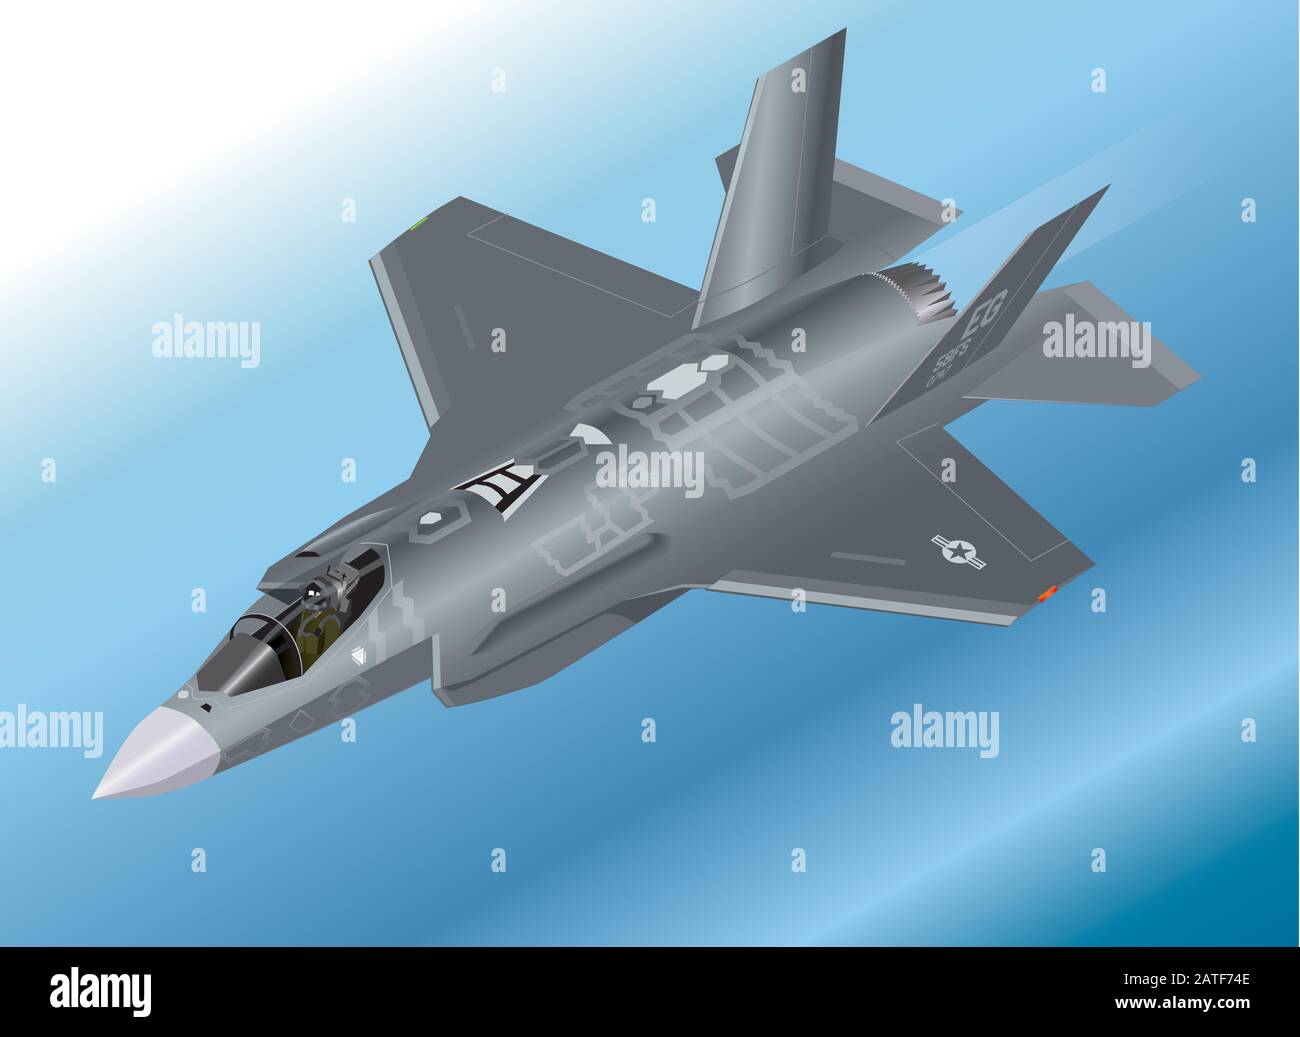 Detailed Isometric Vector Illustration of an F-35 Lightning II Fighter Jet Stock Vector